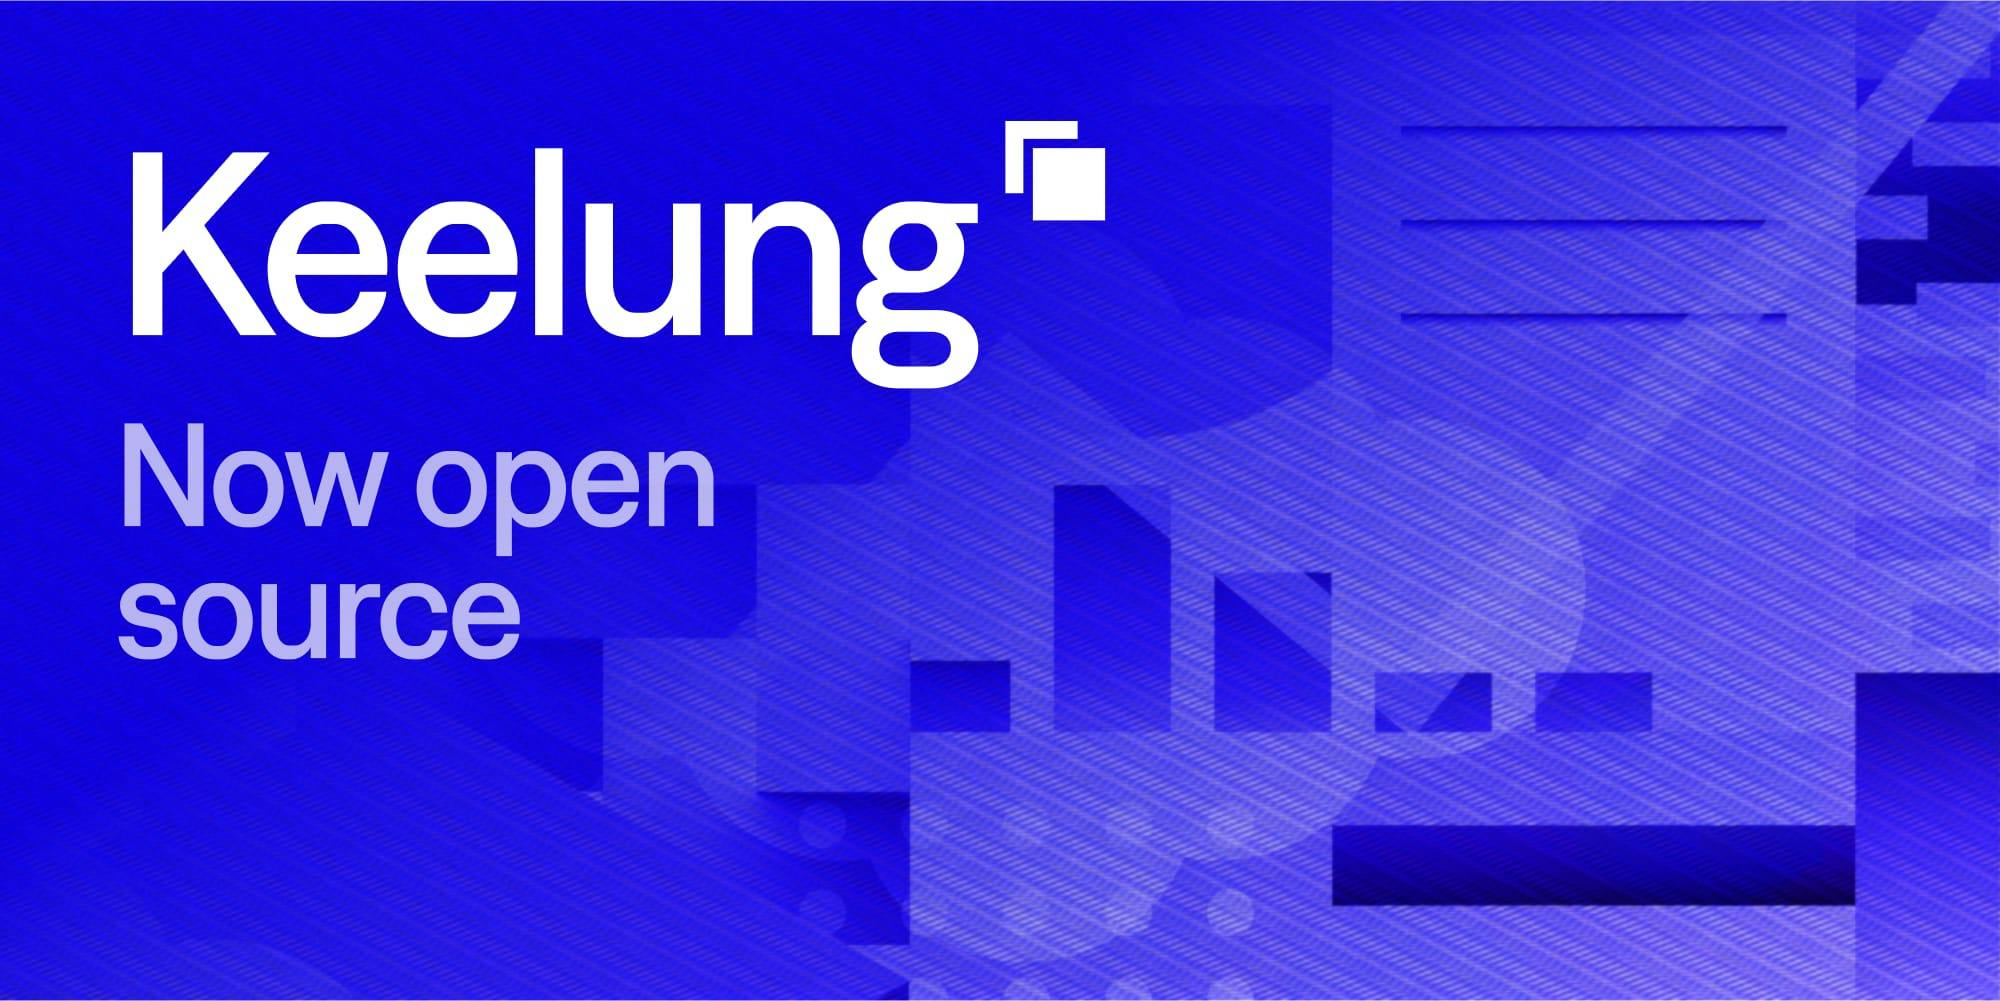 Keelung Compiler is Now Open Source